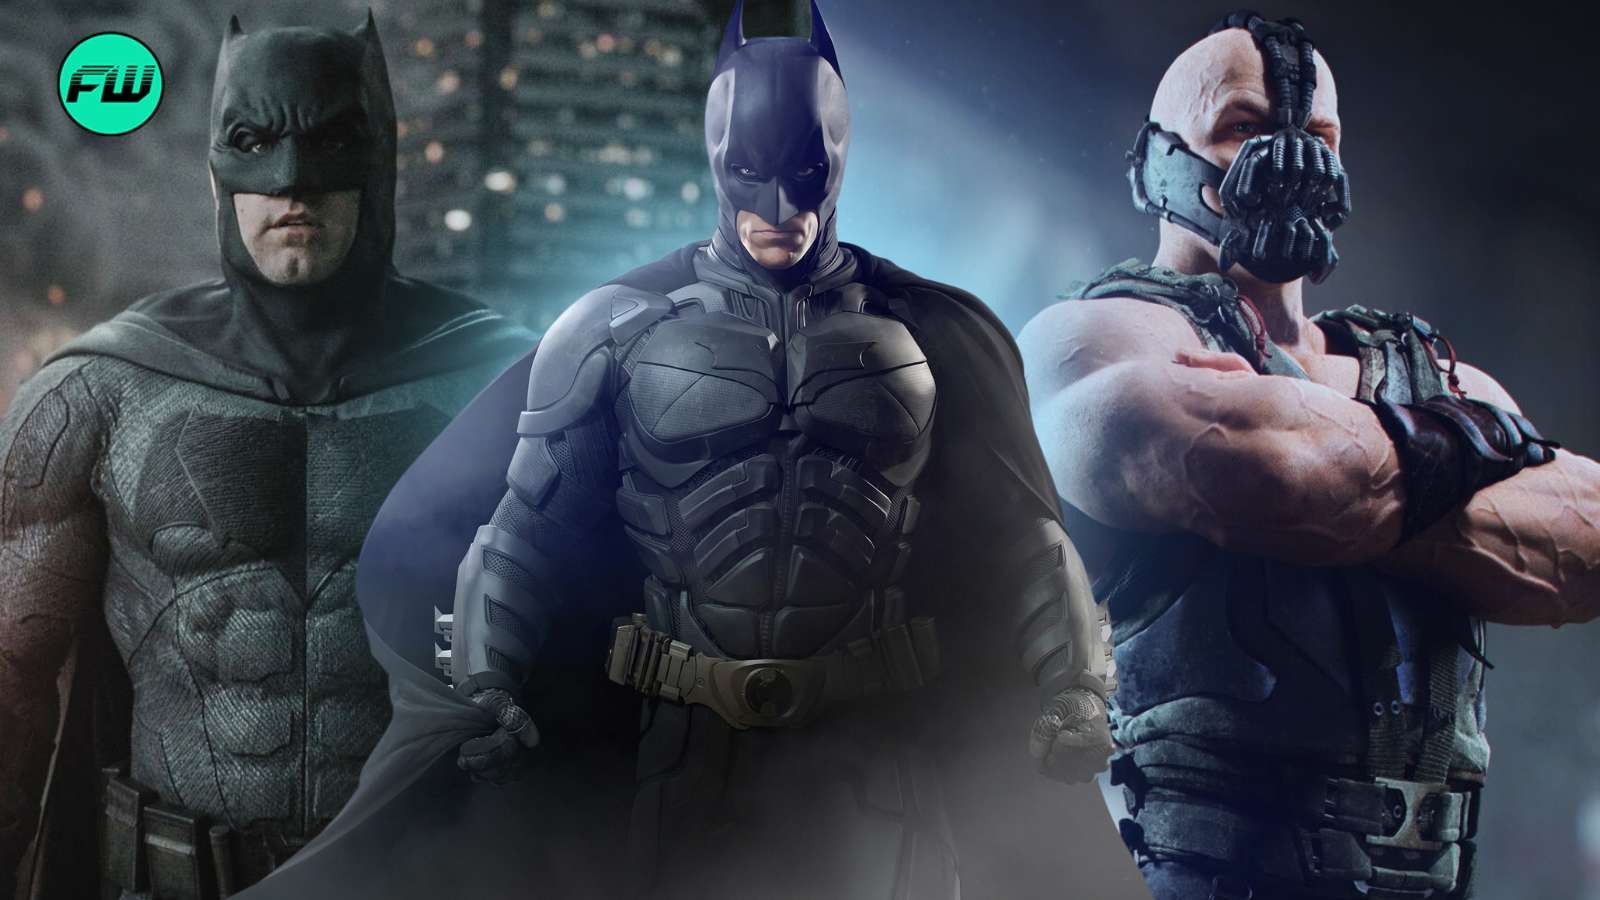 Christian Bale Batman, Ben Affleck Batman and Bane